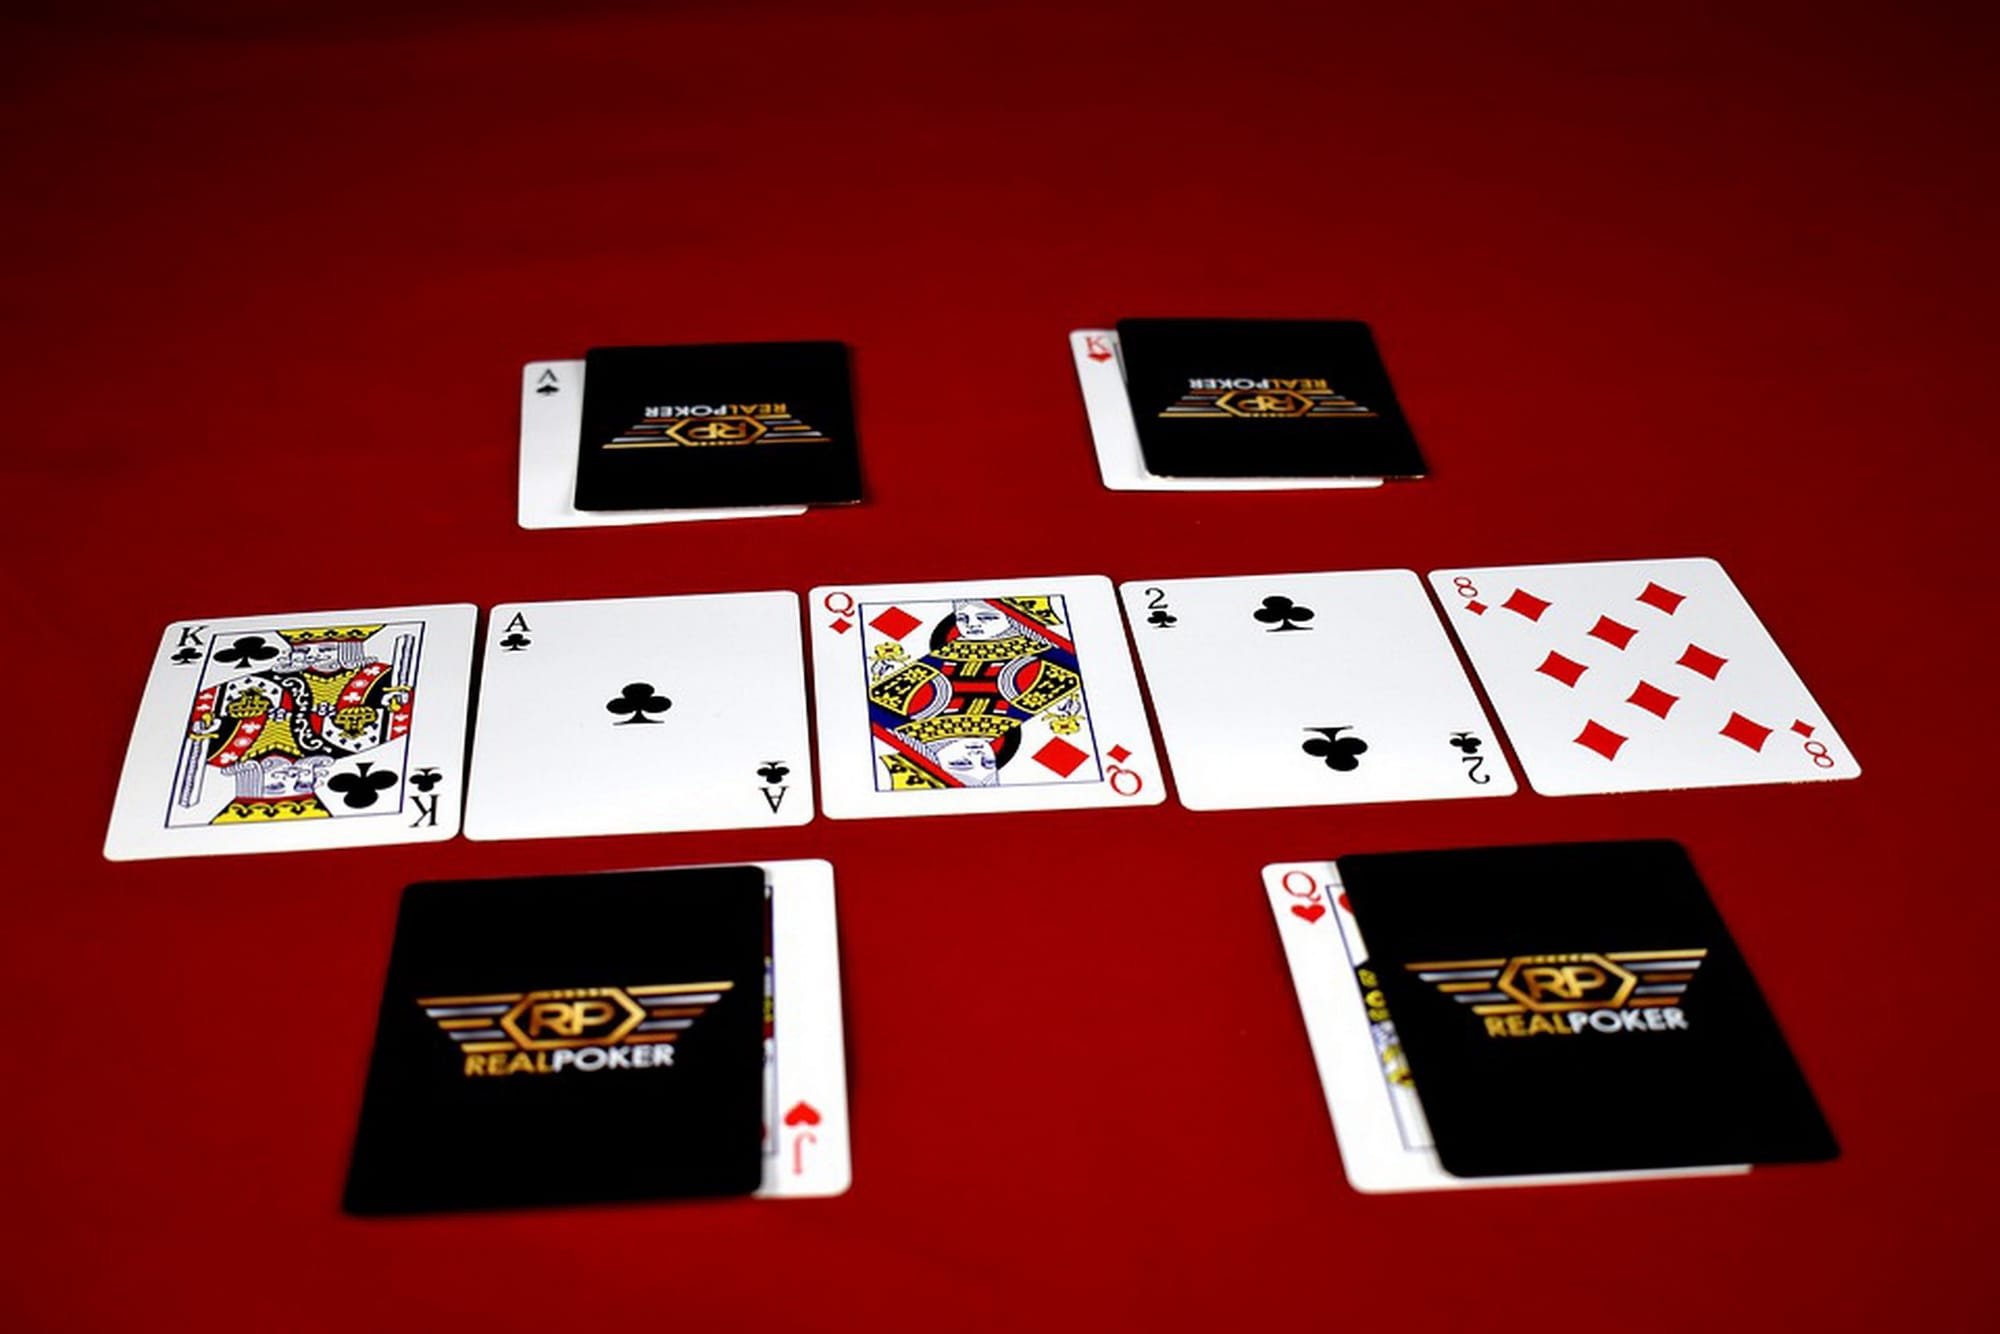 Agen Poker Online Indonesia Terpercaya dan Domino gaple online terbaik